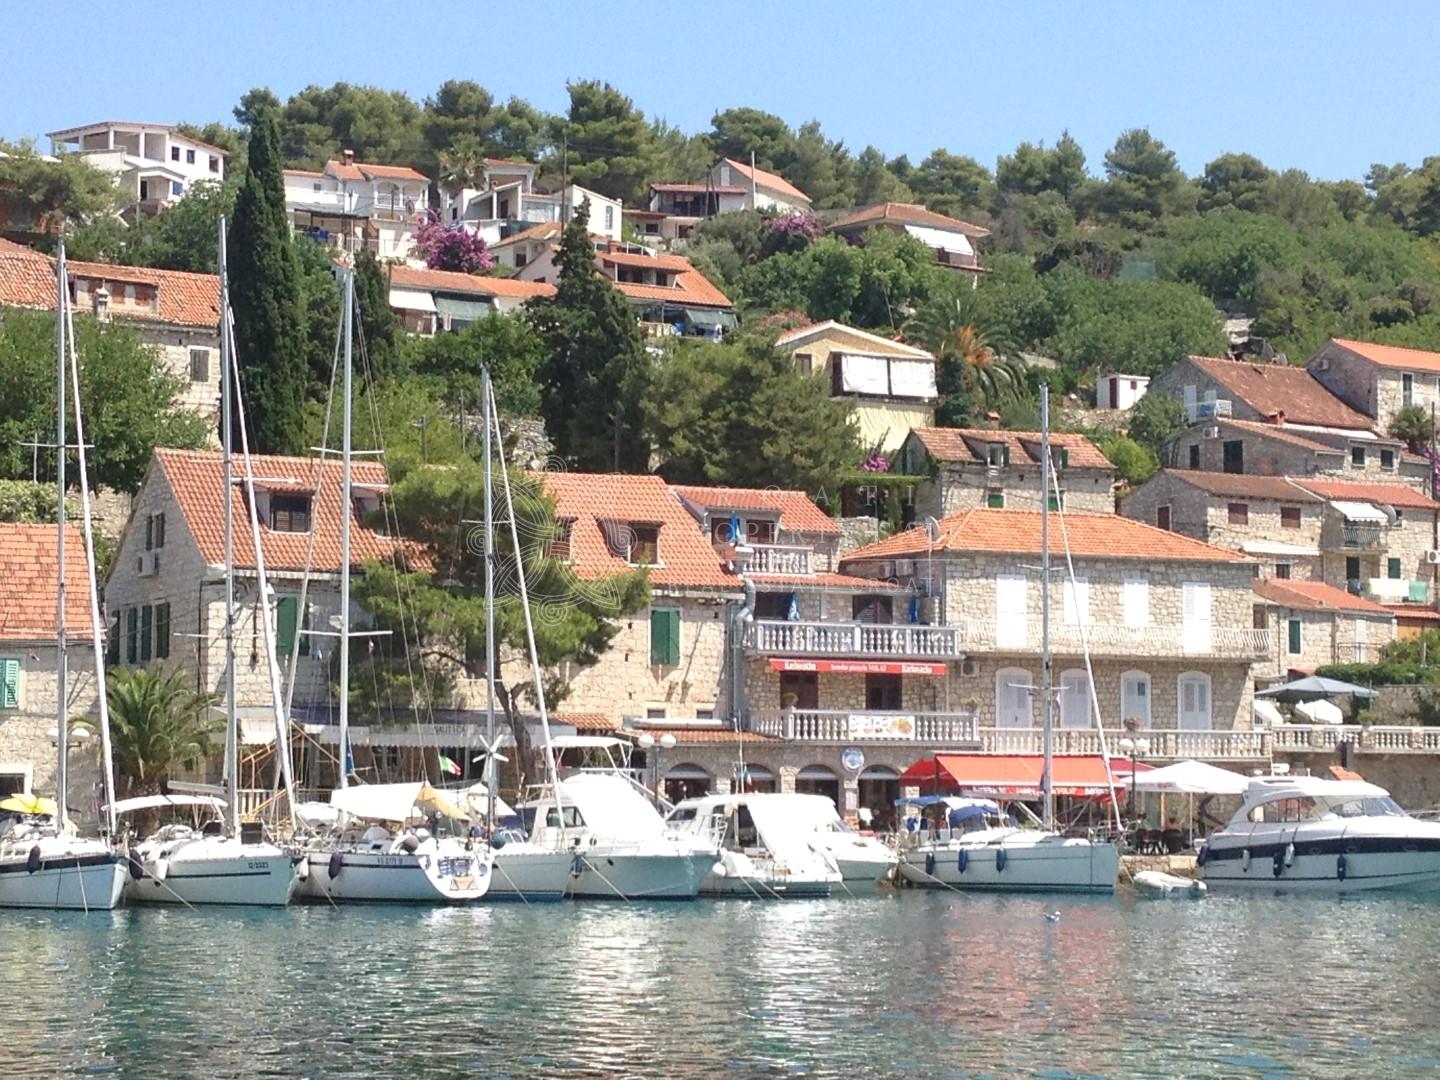 Croatia Solta island house in development for sale by the sea